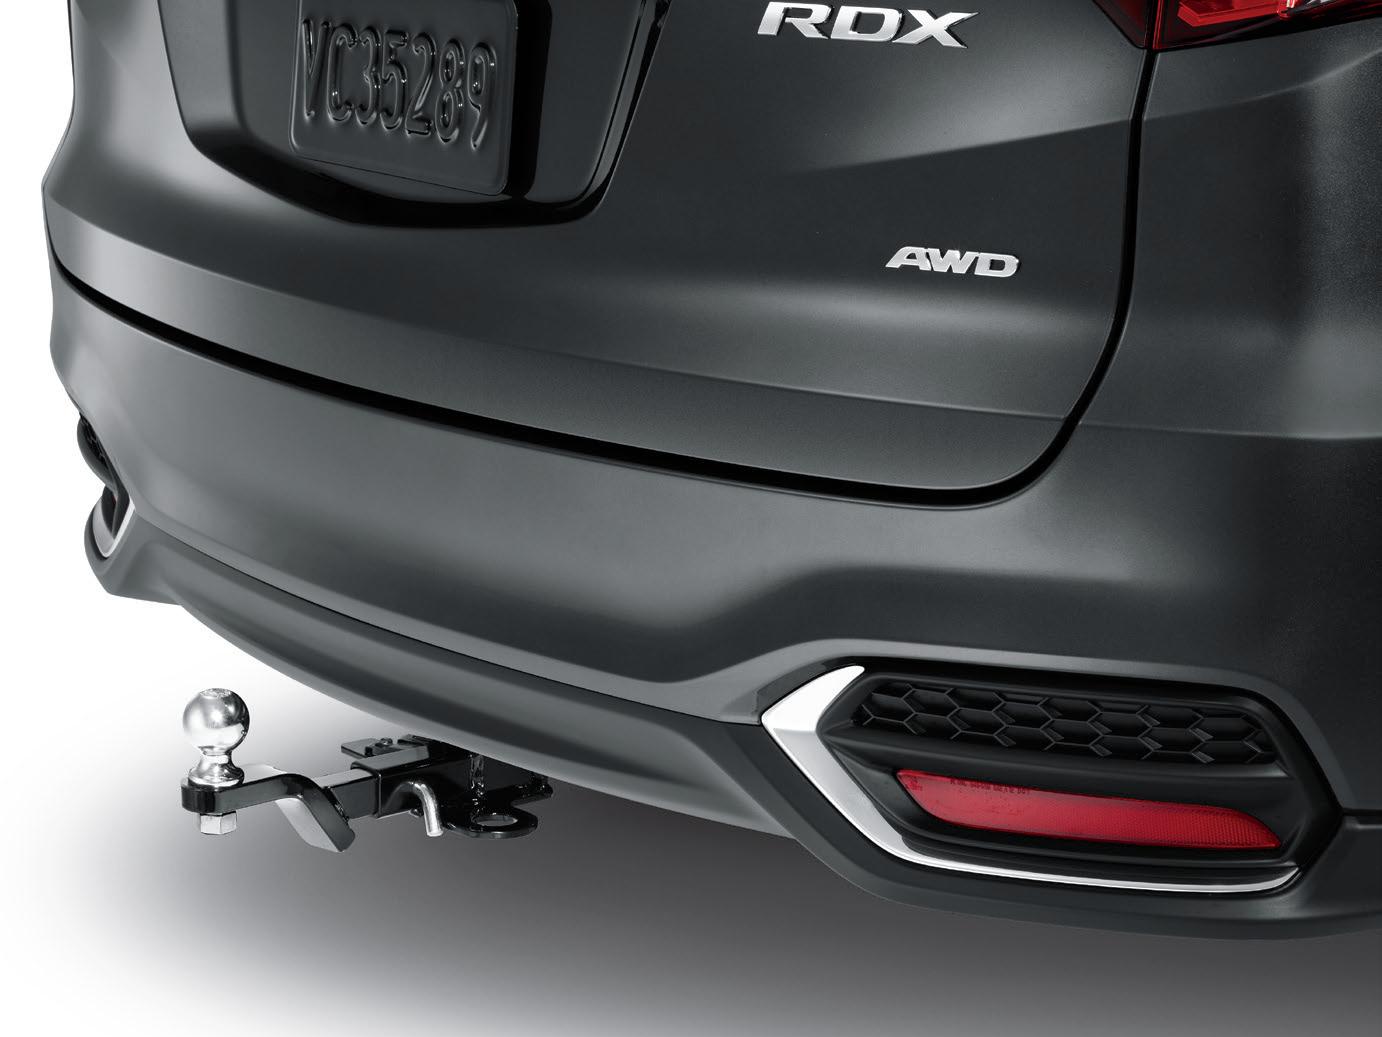 2017 Acura RDX Trailer Hitch - Wiring Harness 08L91-TX4-200